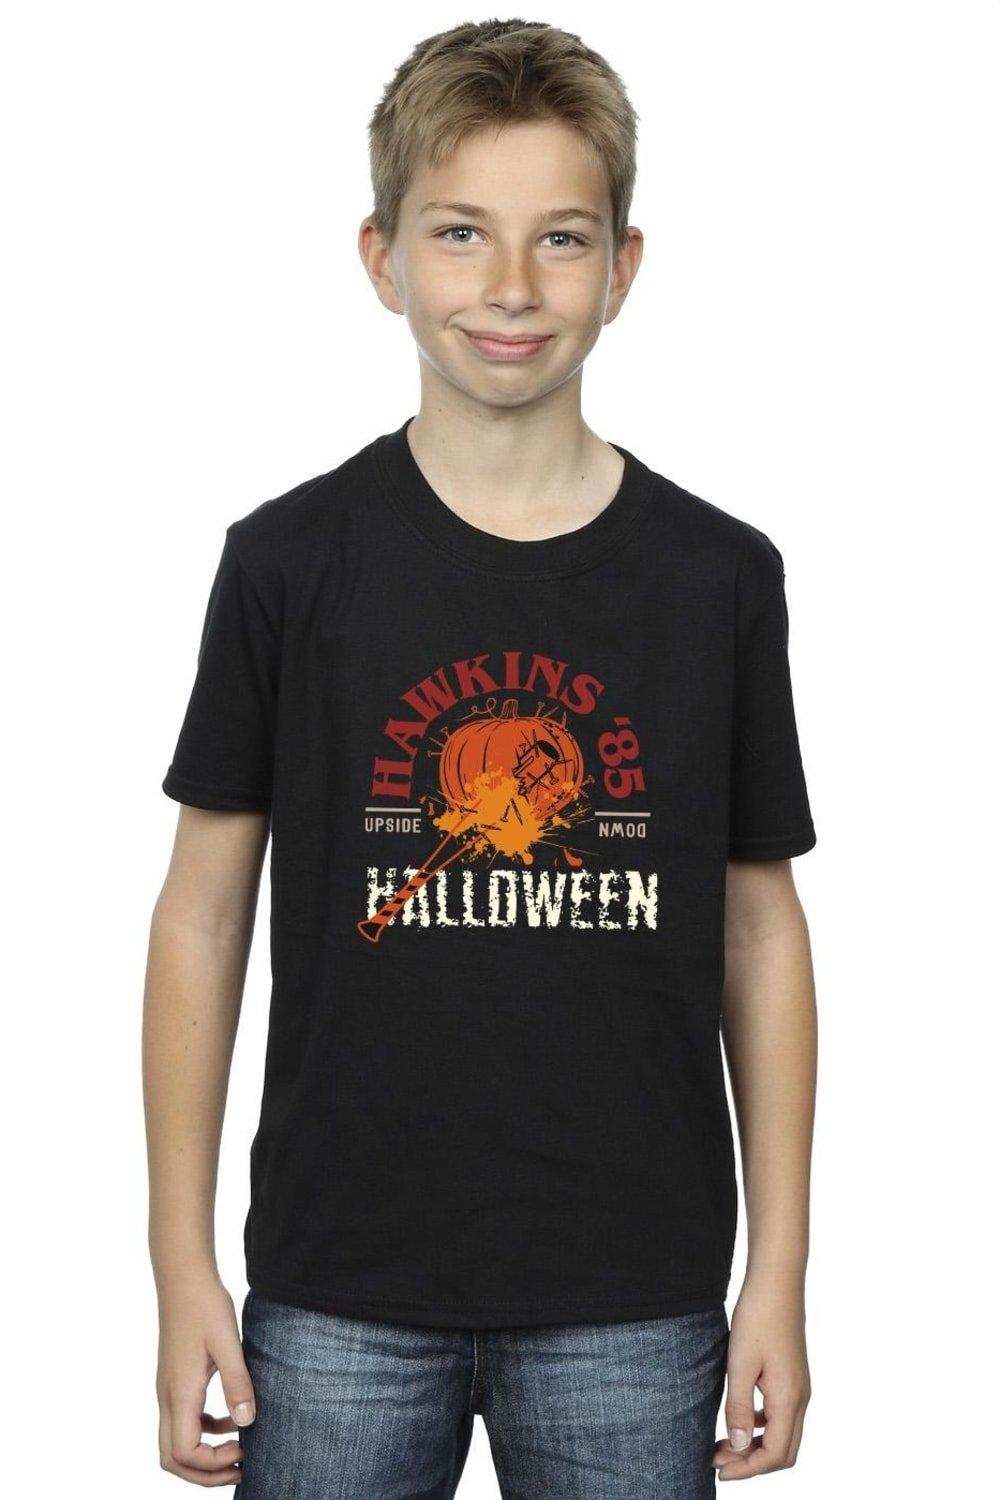 Stranger Things Hawkins Halloween T-Shirt